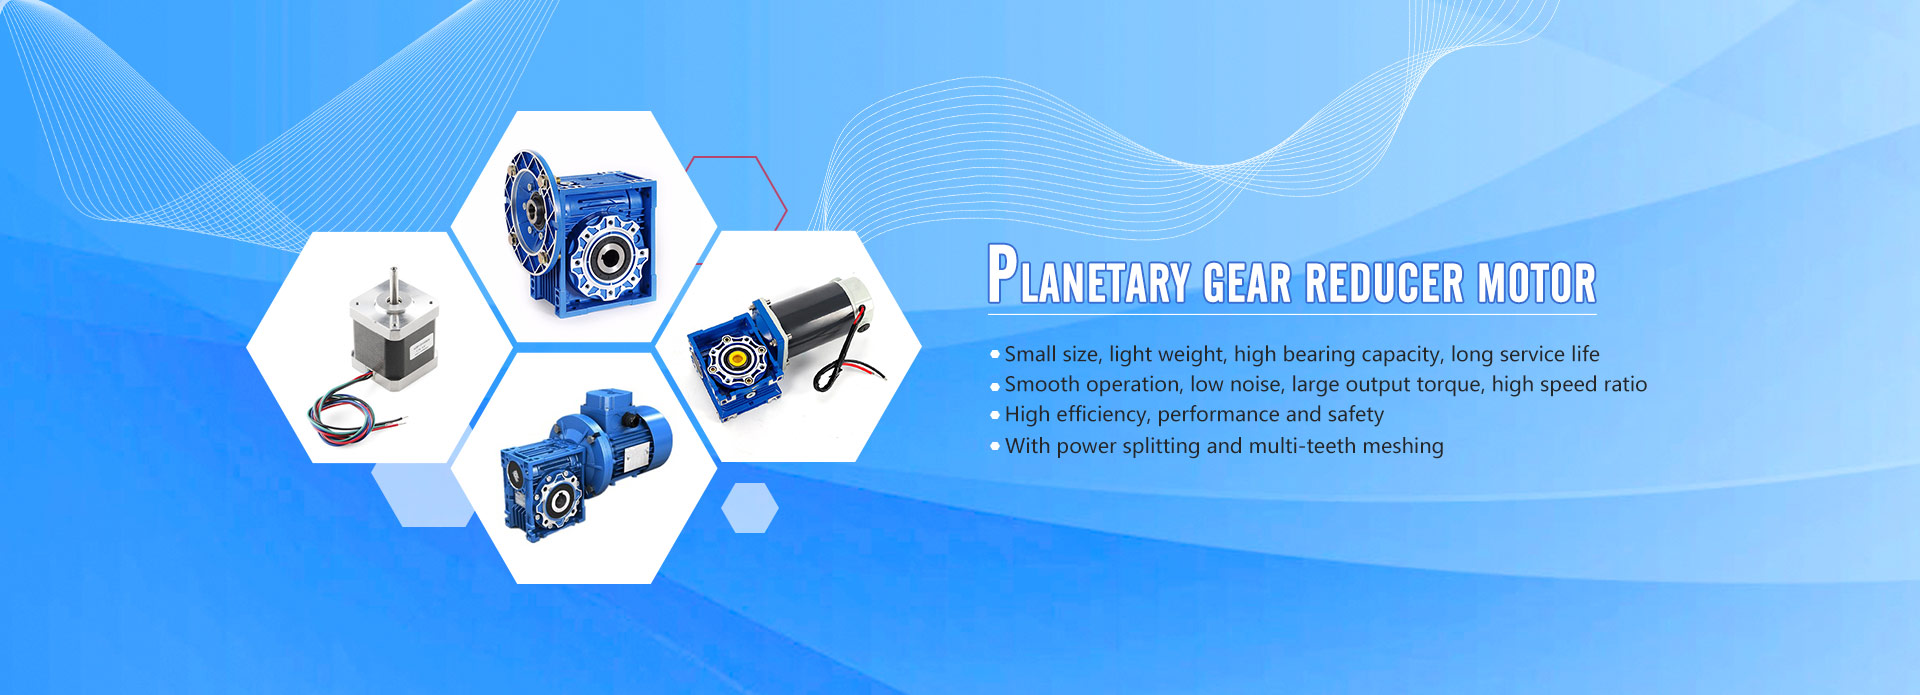 Planetary Gear Reducer Motor